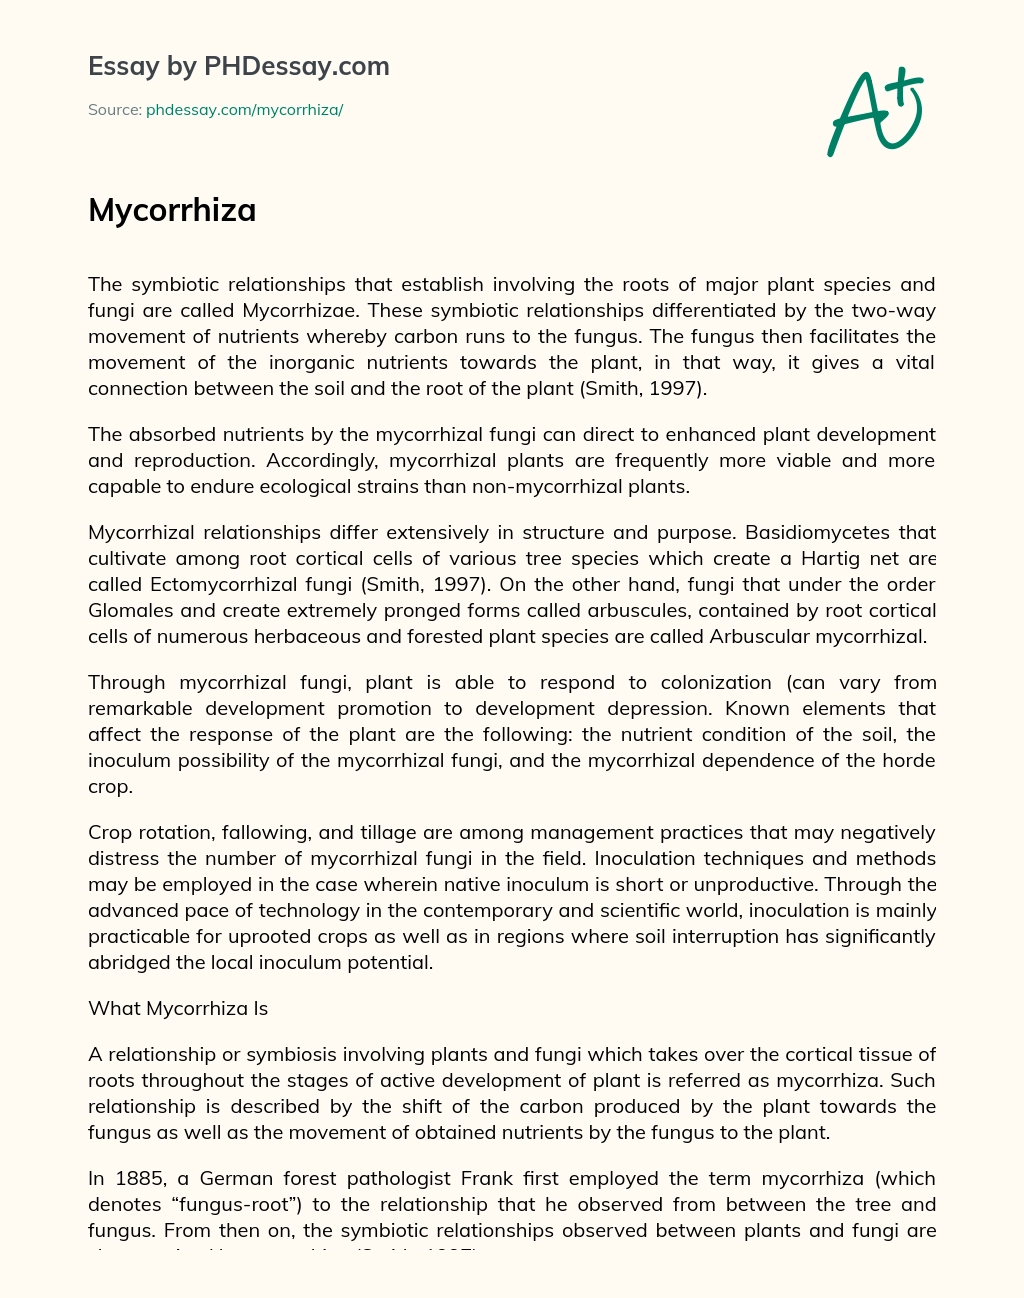 Mycorrhizae: The Symbiotic Relationship between Plants and Fungi. essay